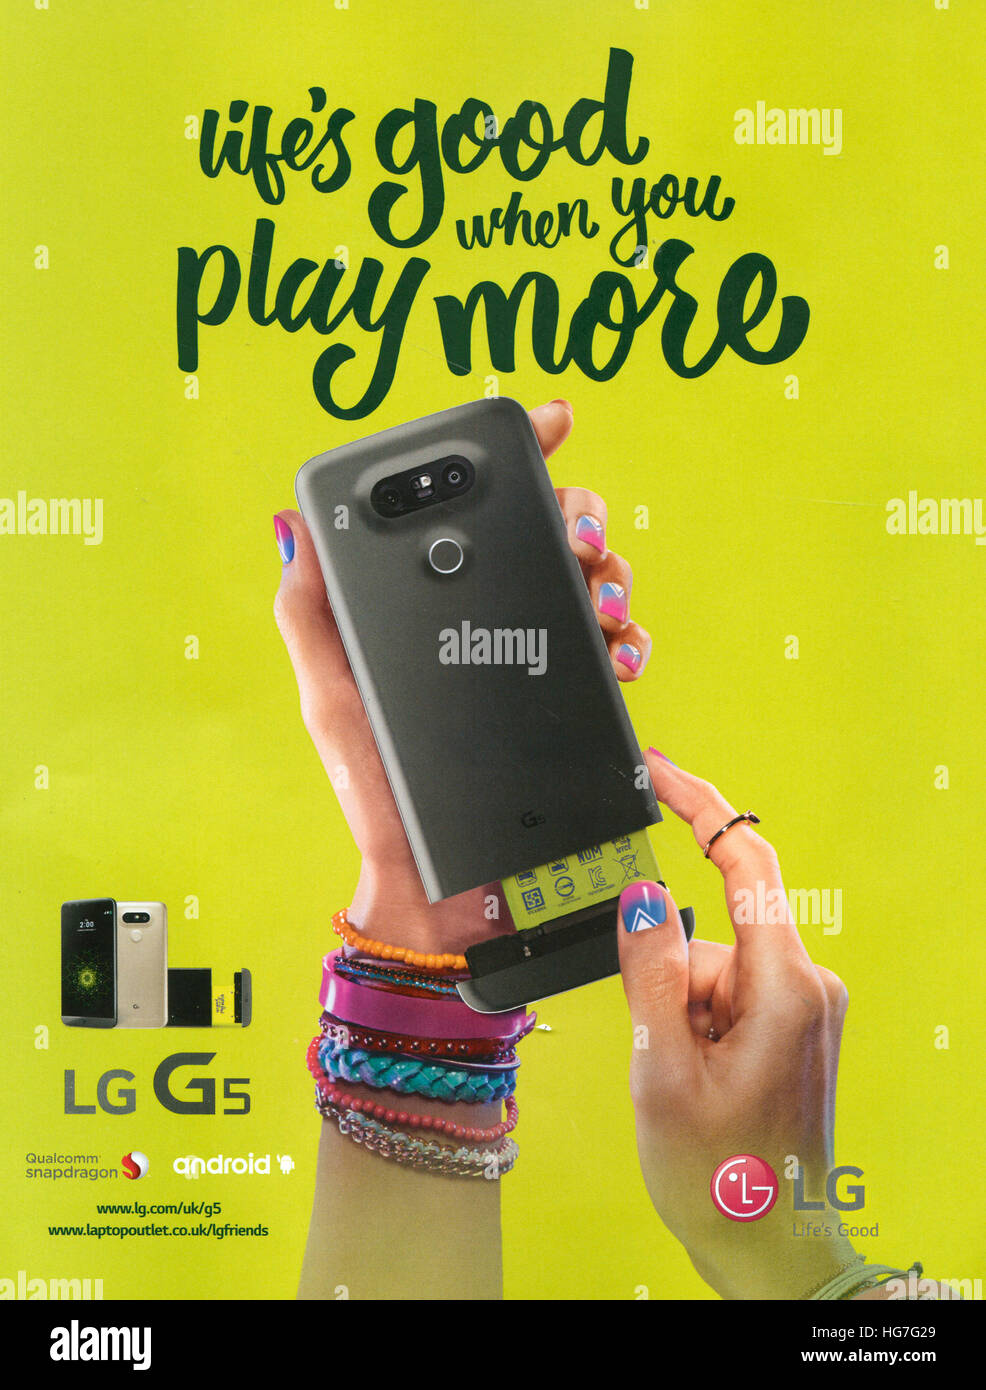 2010s UK LG Magazine Advert Stock Photo